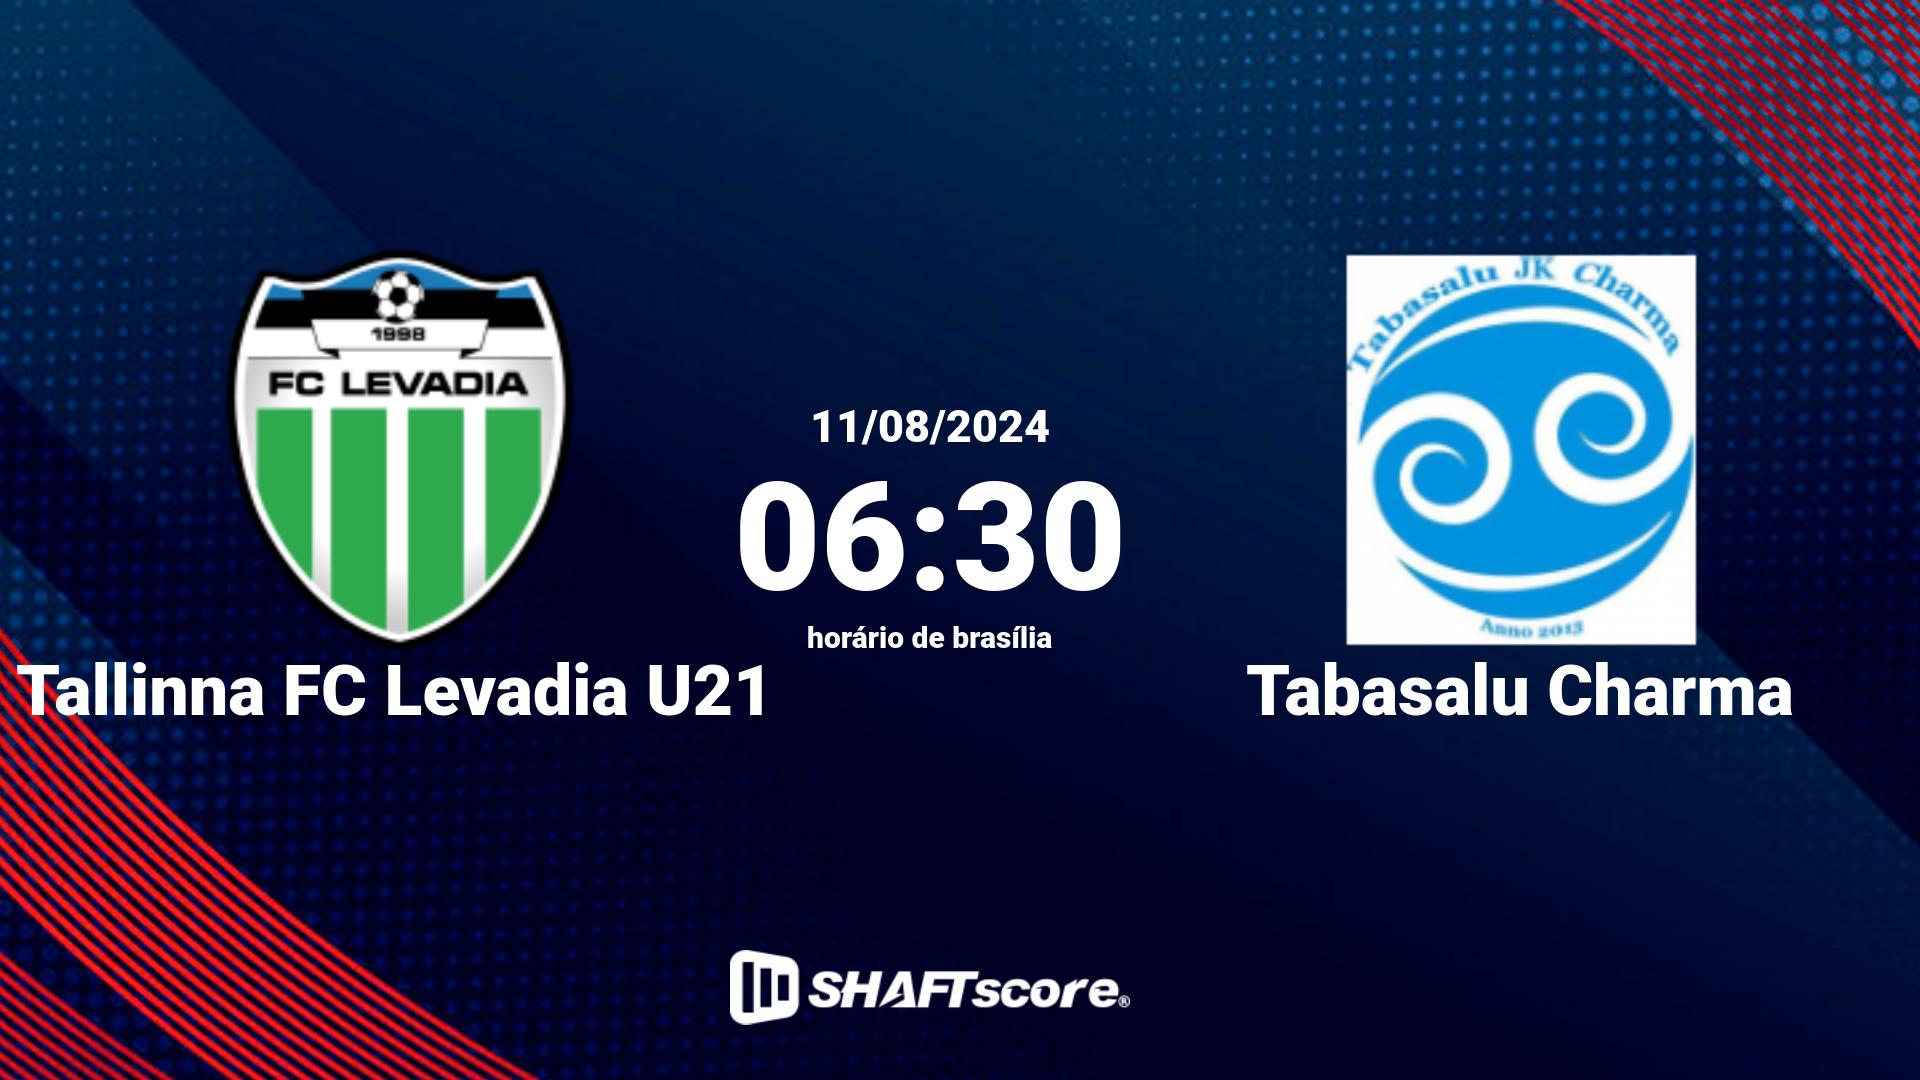 Estatísticas do jogo Tallinna FC Levadia U21 vs Tabasalu Charma 11.08 06:30